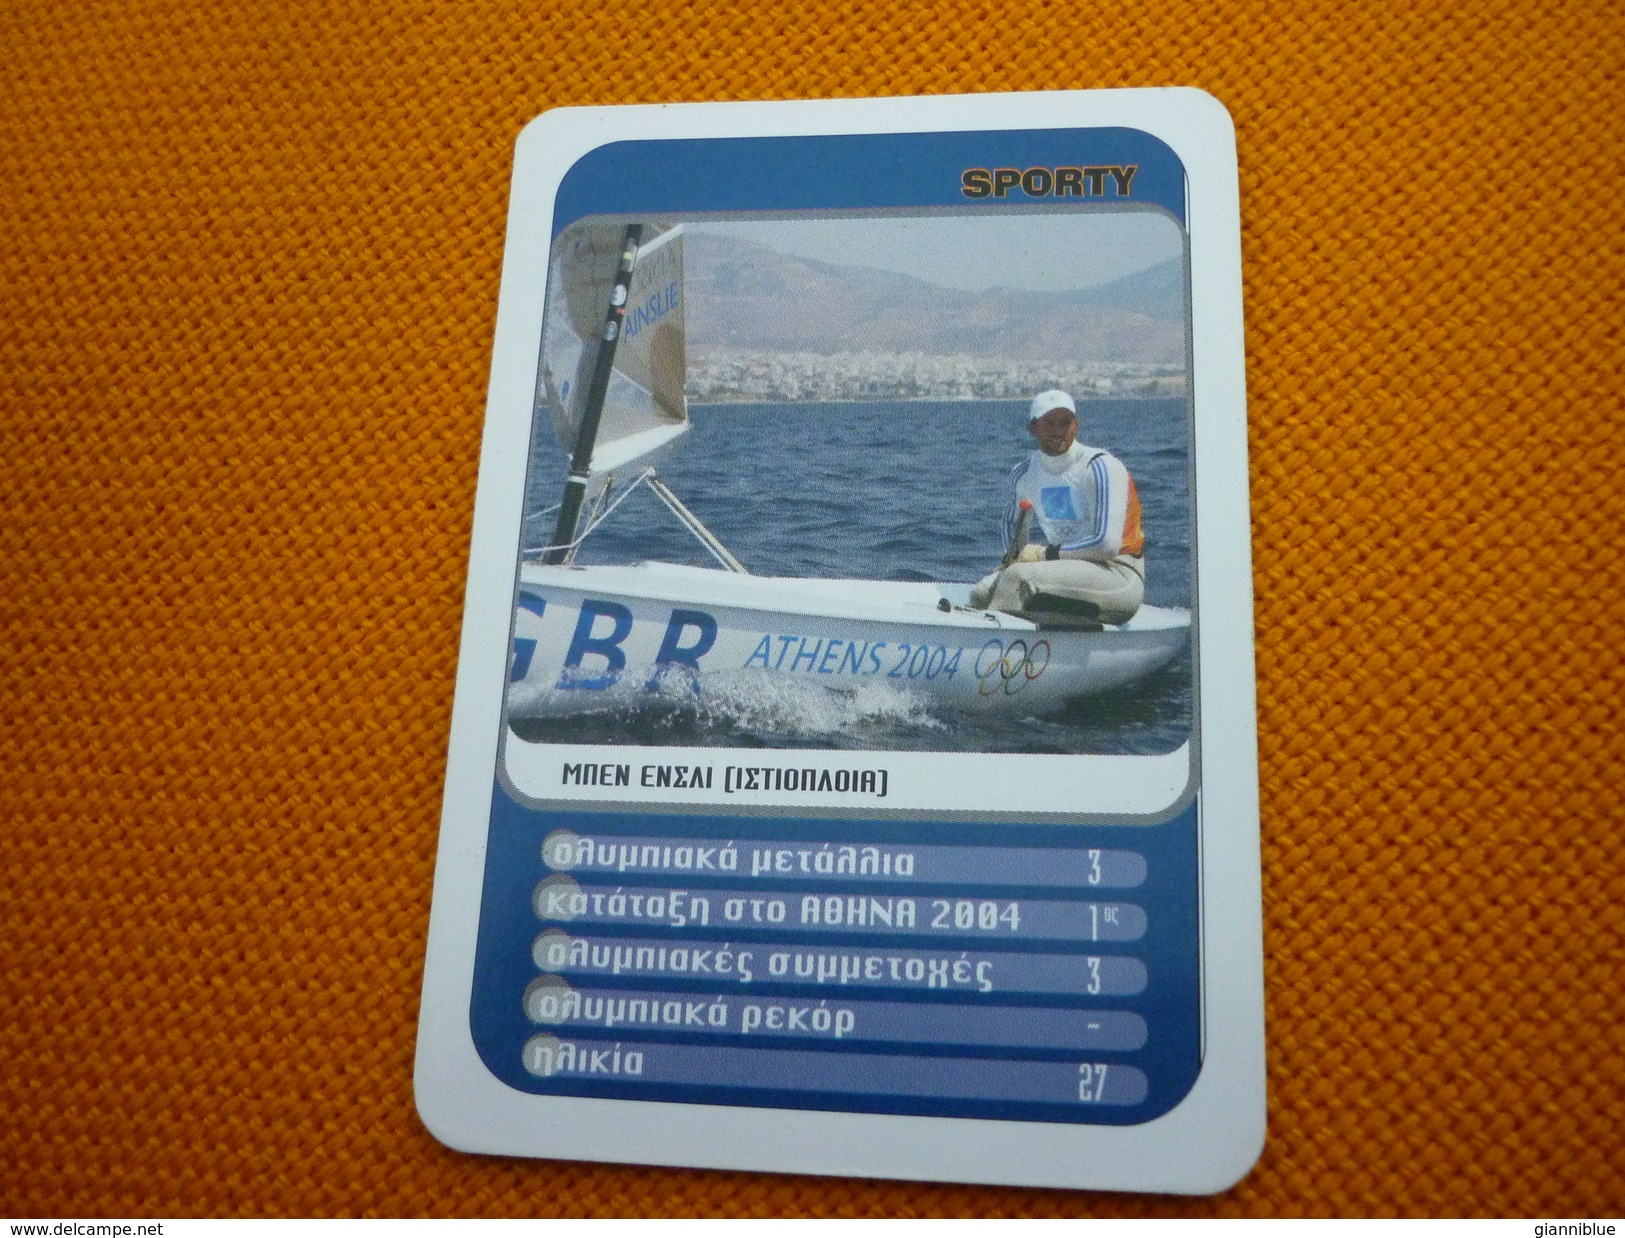 Ben Ainslie UK Sailor Sailing Men's Finn Class Athens 2004 Olympic Games Medalist Greece Greek Trading Card - Trading Cards